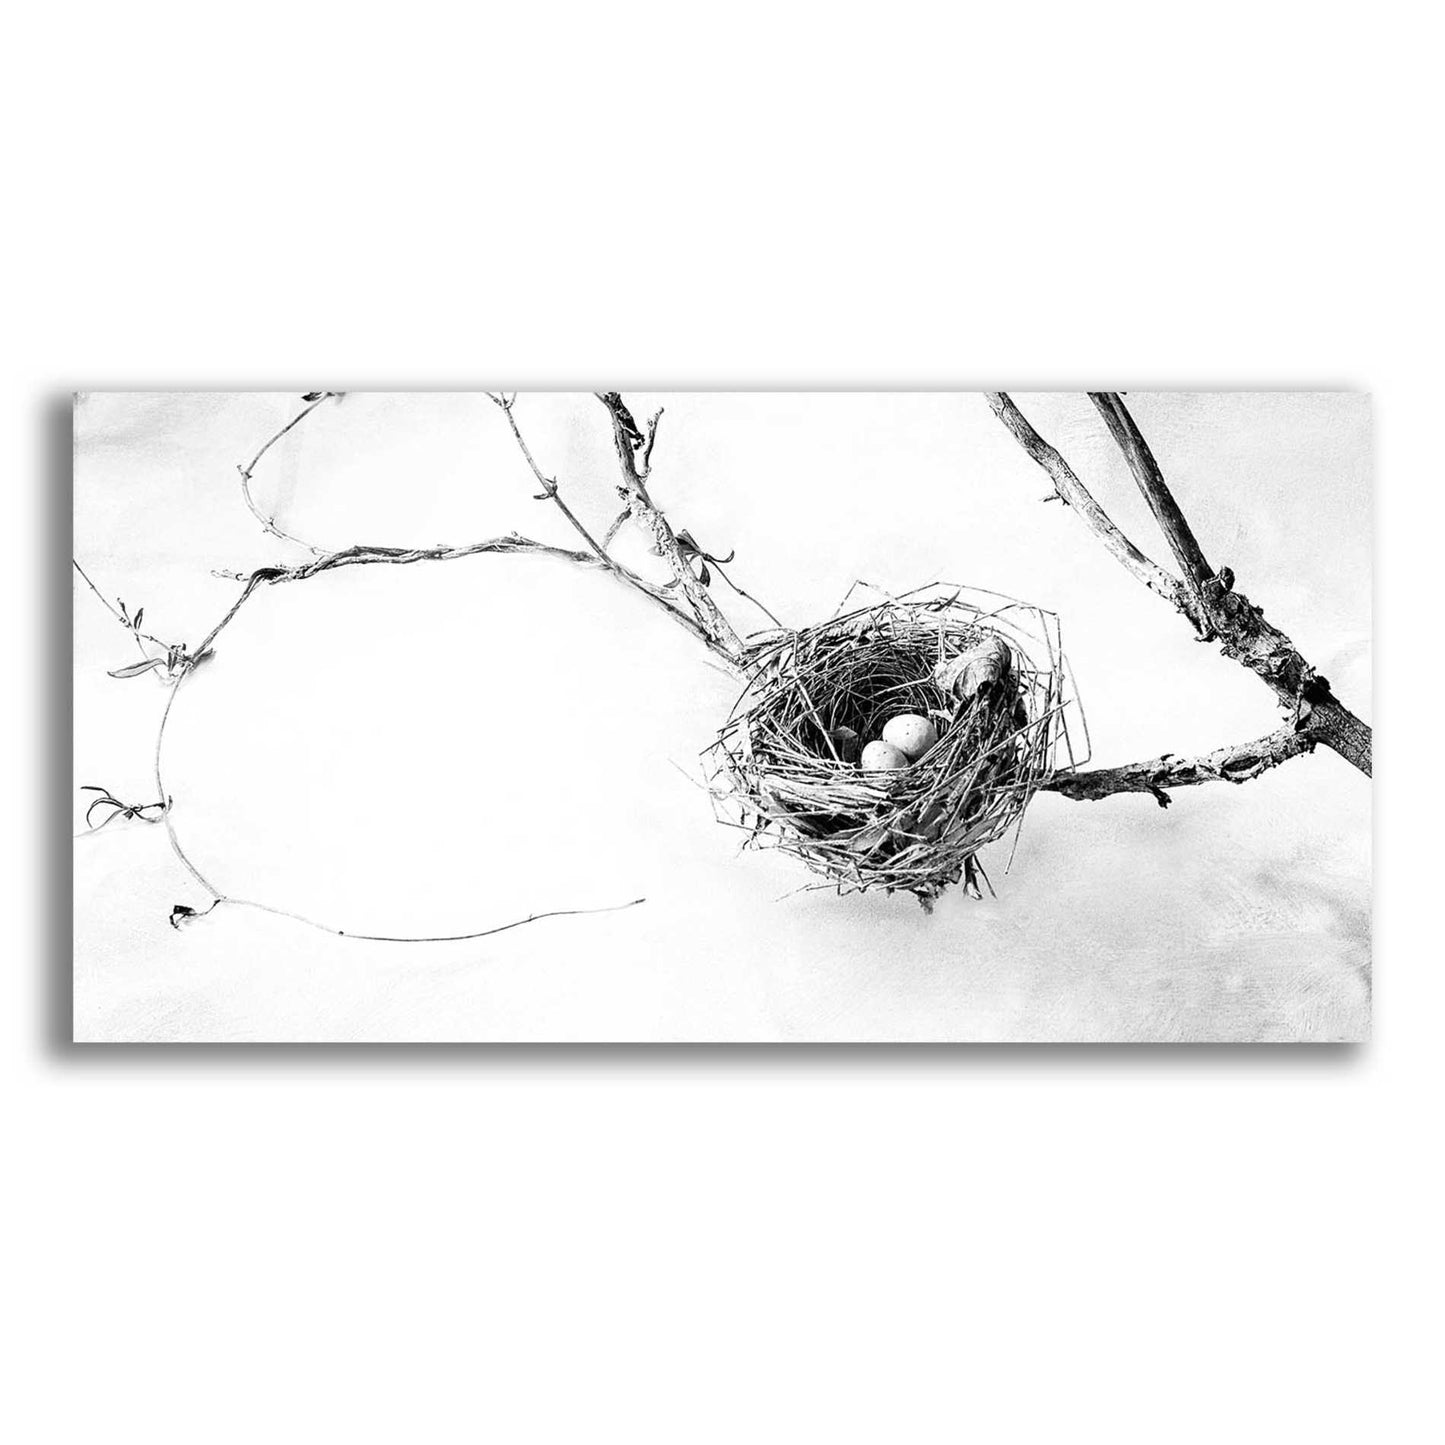 Epic Art 'Nest and Branch III' by Debra Van Swearingen, Acrylic Glass Wall Art,24x12x1.1x0,40x20x1.74x0,60x30x1.74x0